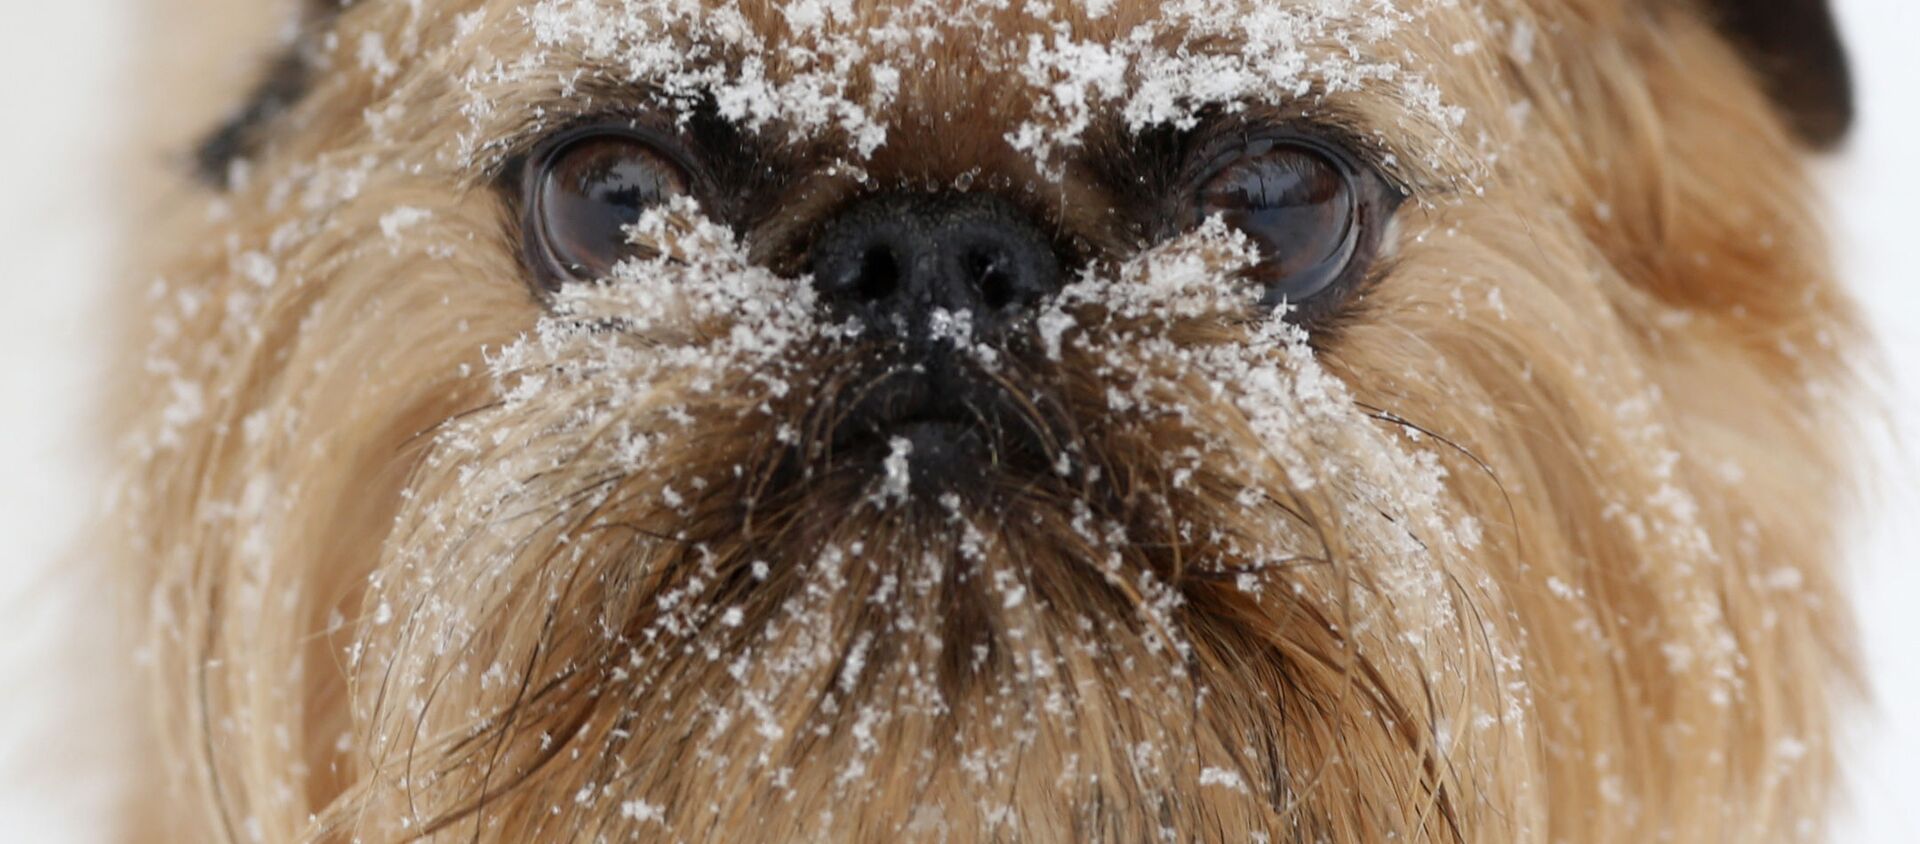 Снег на морде пса в центре ухода за собаками Hounds on the Hudson в Олбани, штат Нью-Йорк, США - Sputnik Lietuva, 1920, 25.02.2021